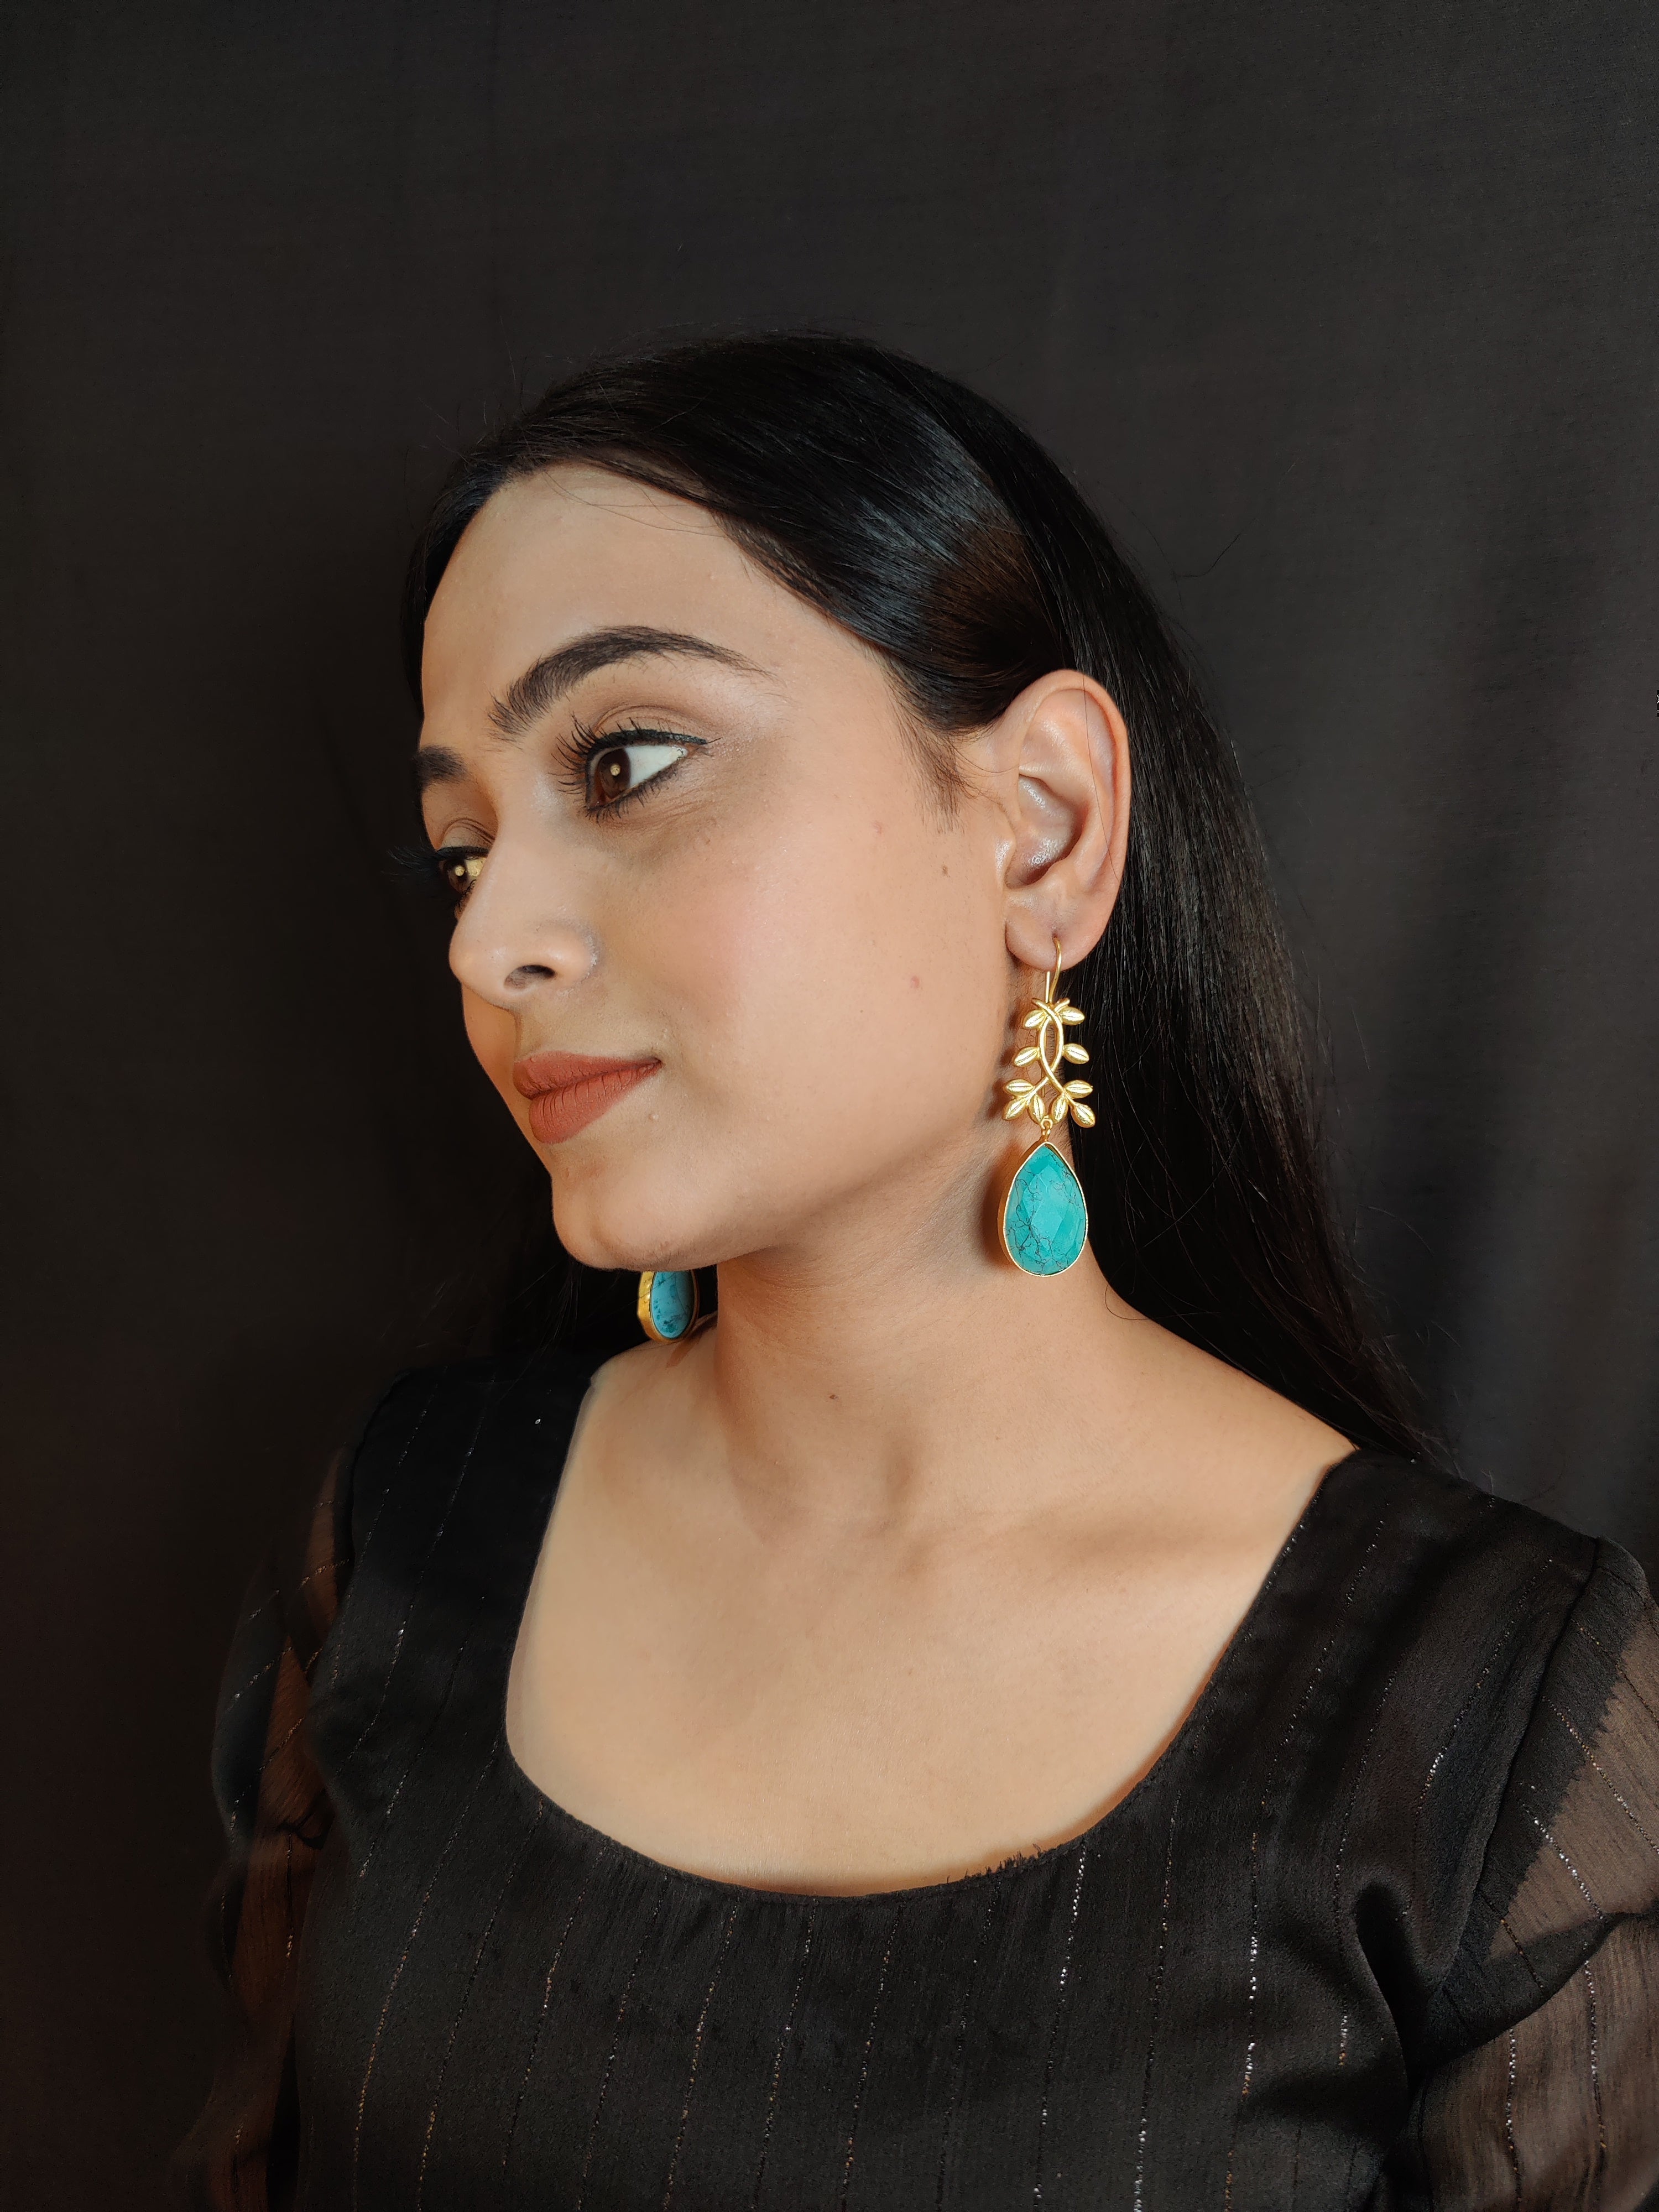 Surbani gold earrings